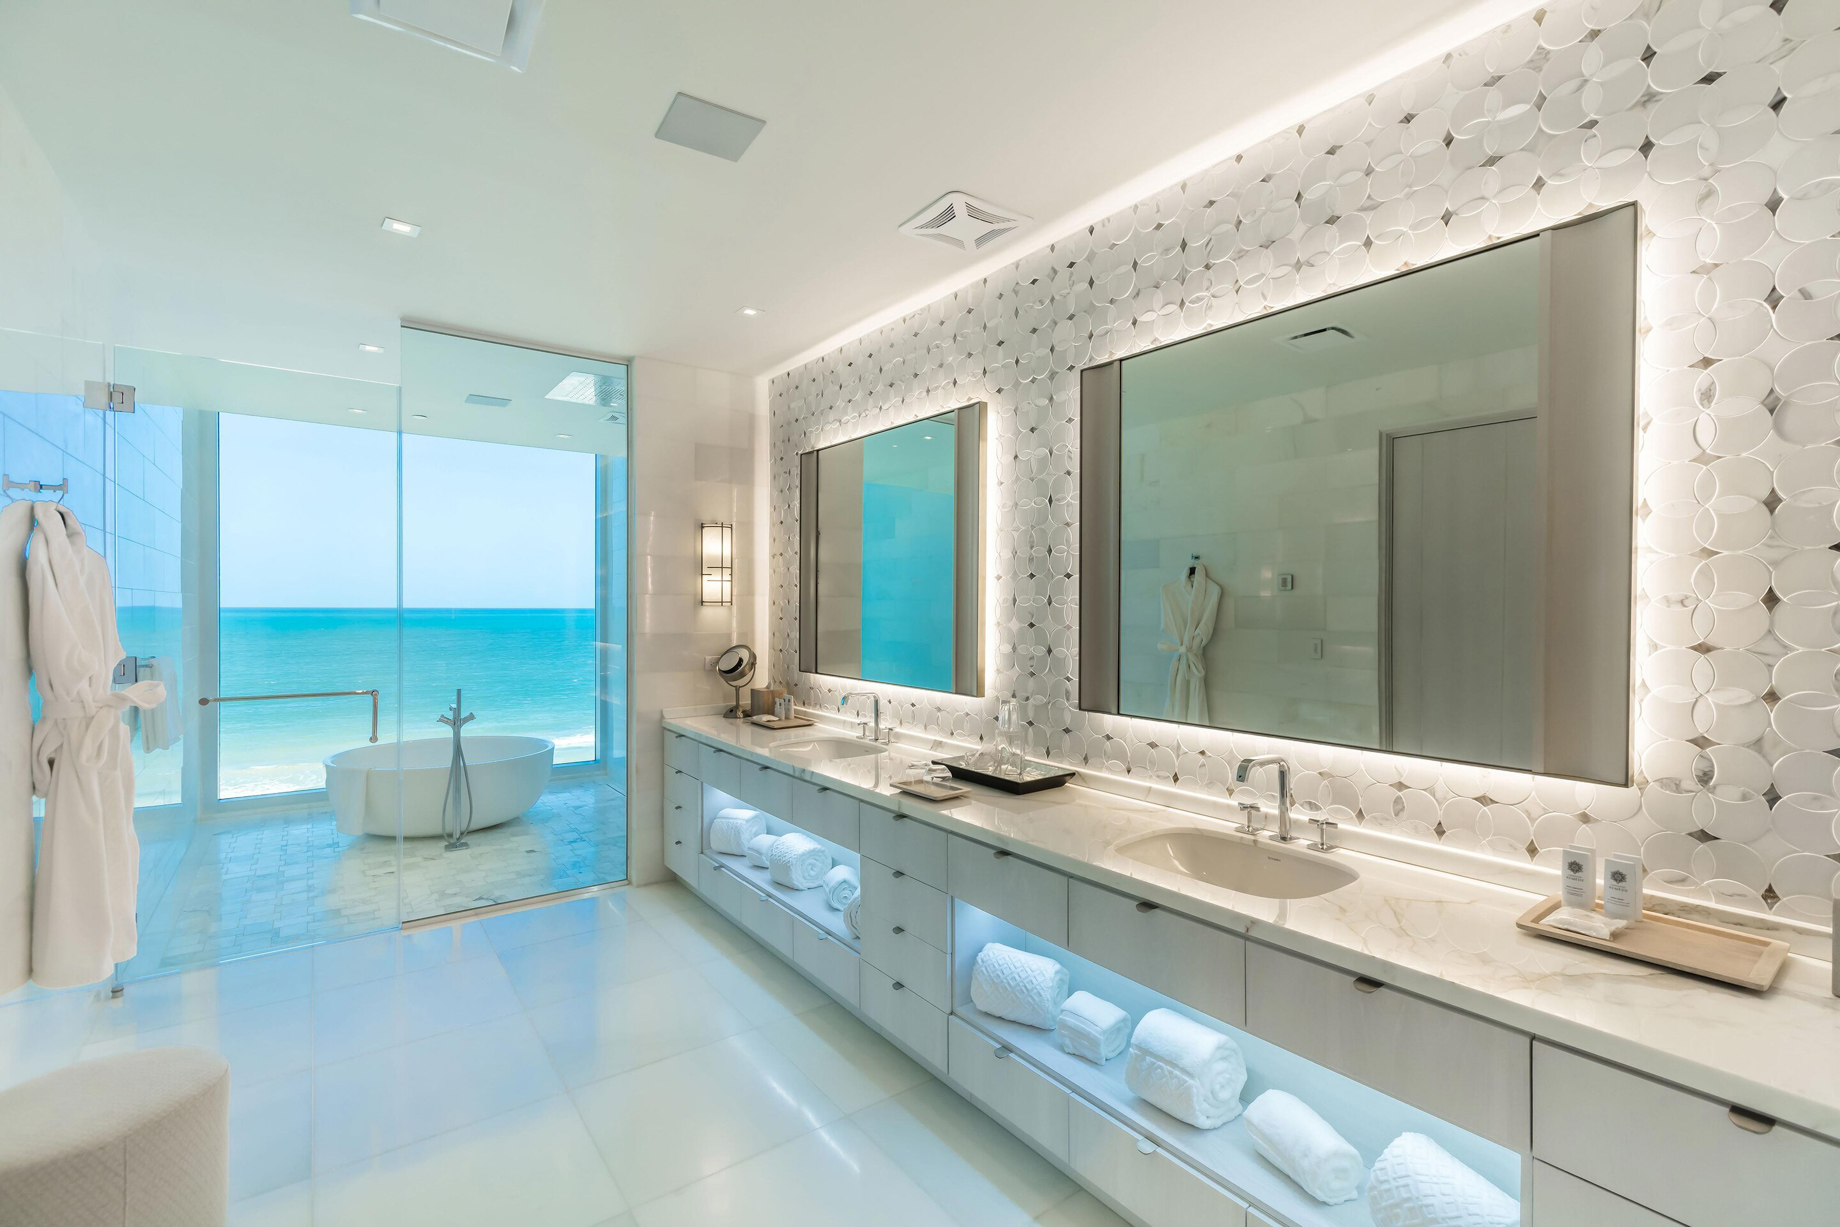 The St. Regis Bahia Beach Resort – Rio Grande, Puerto Rico – Ocean Drive Residences Master Bathroom